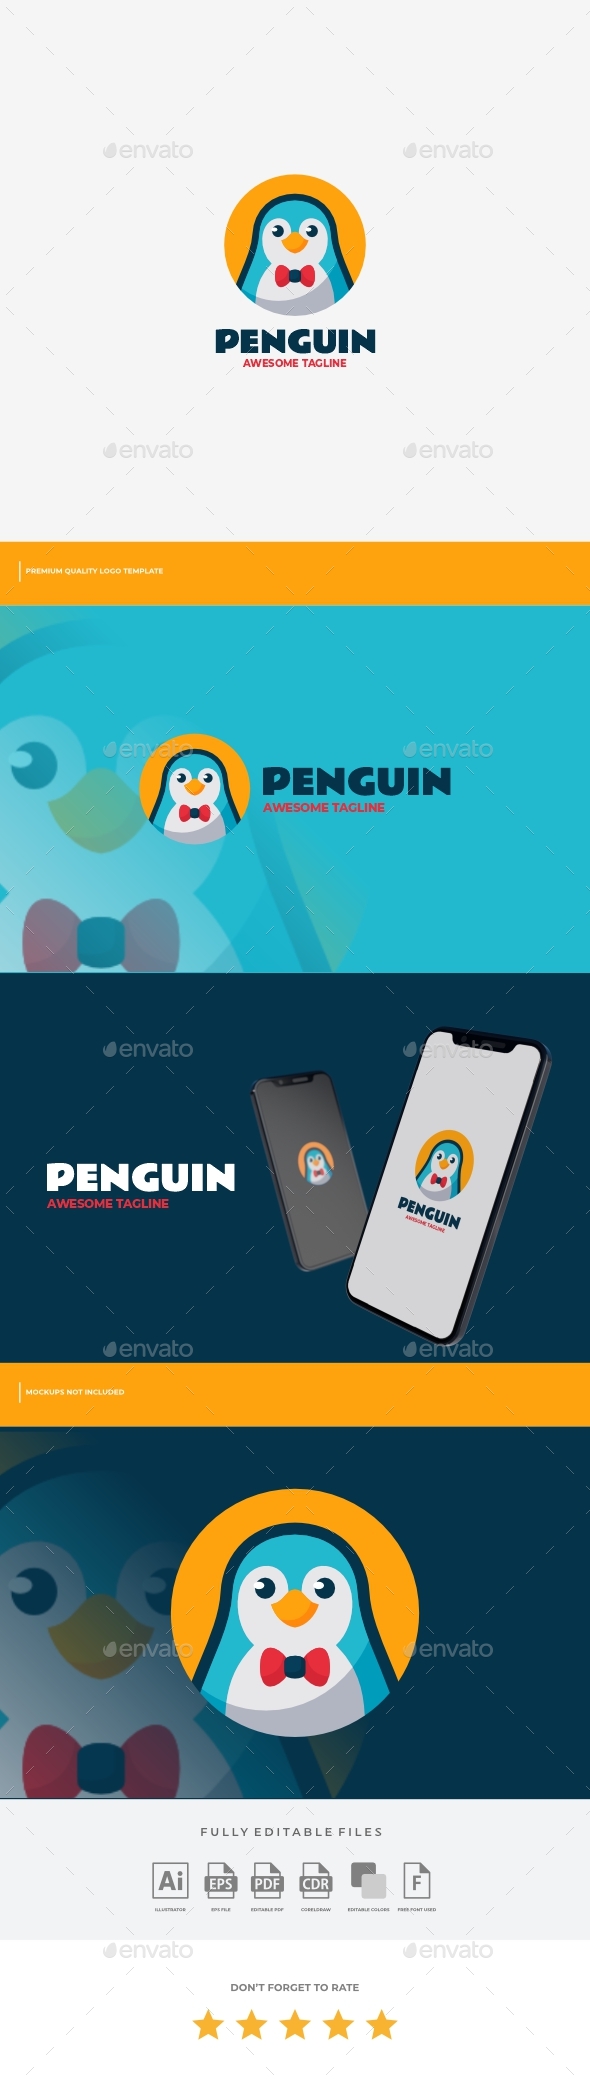 [DOWNLOAD]Penguin Simple Mascot Logo Template